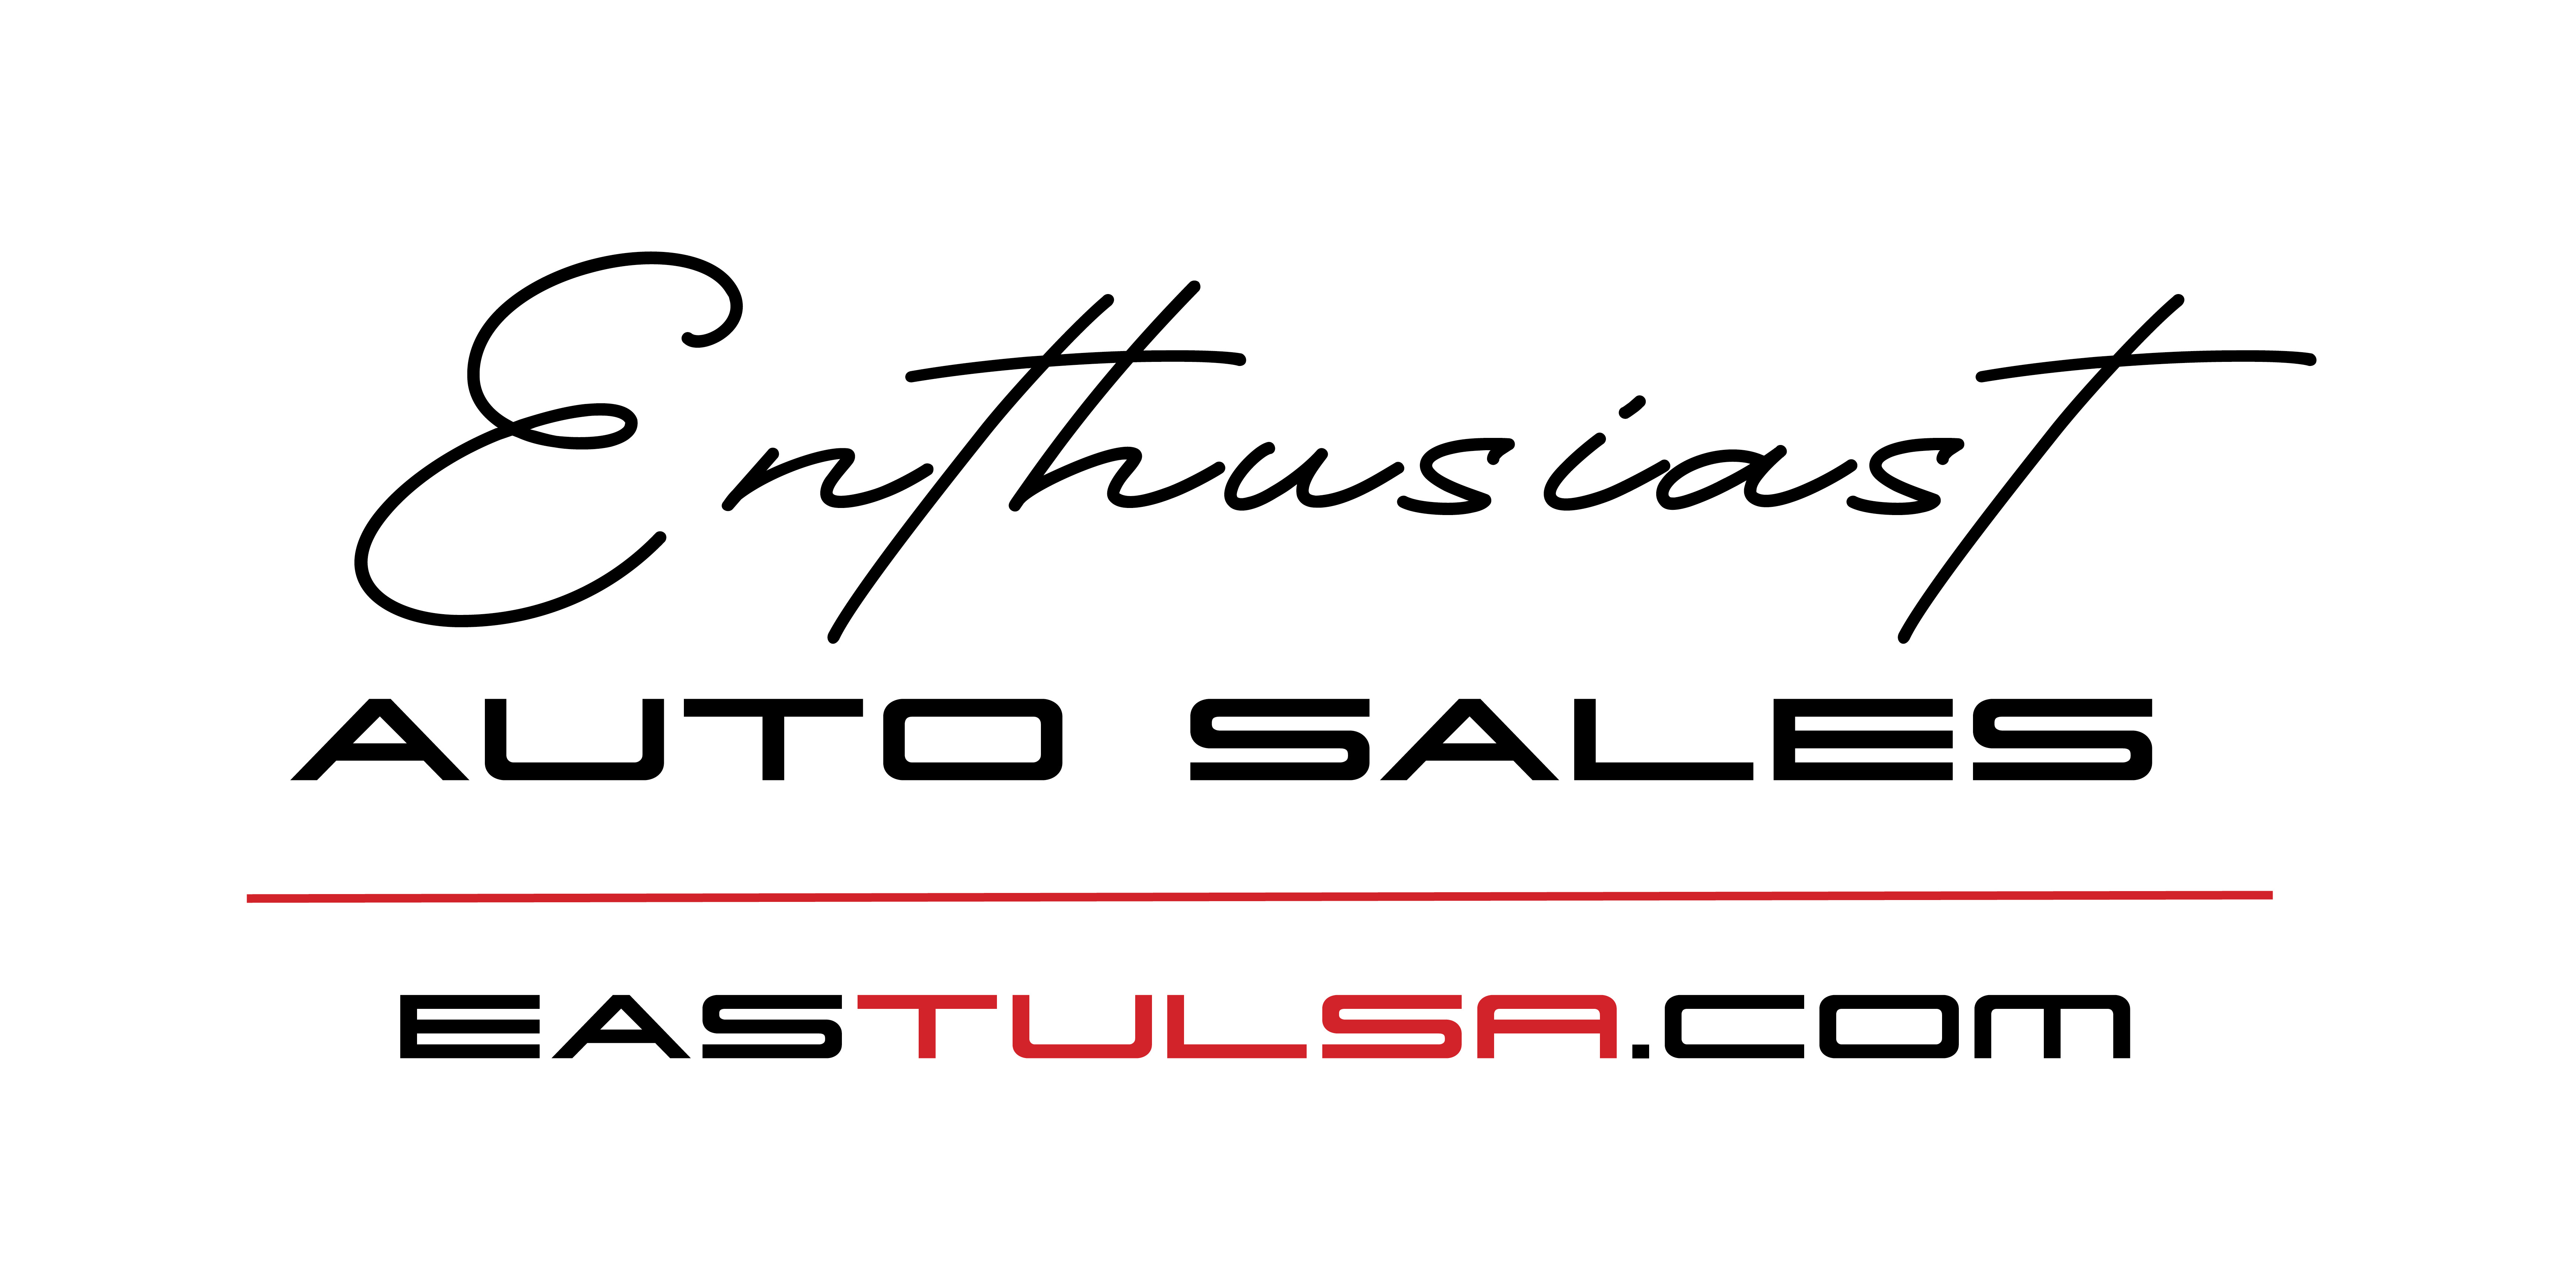 Enthusiast Auto Sales